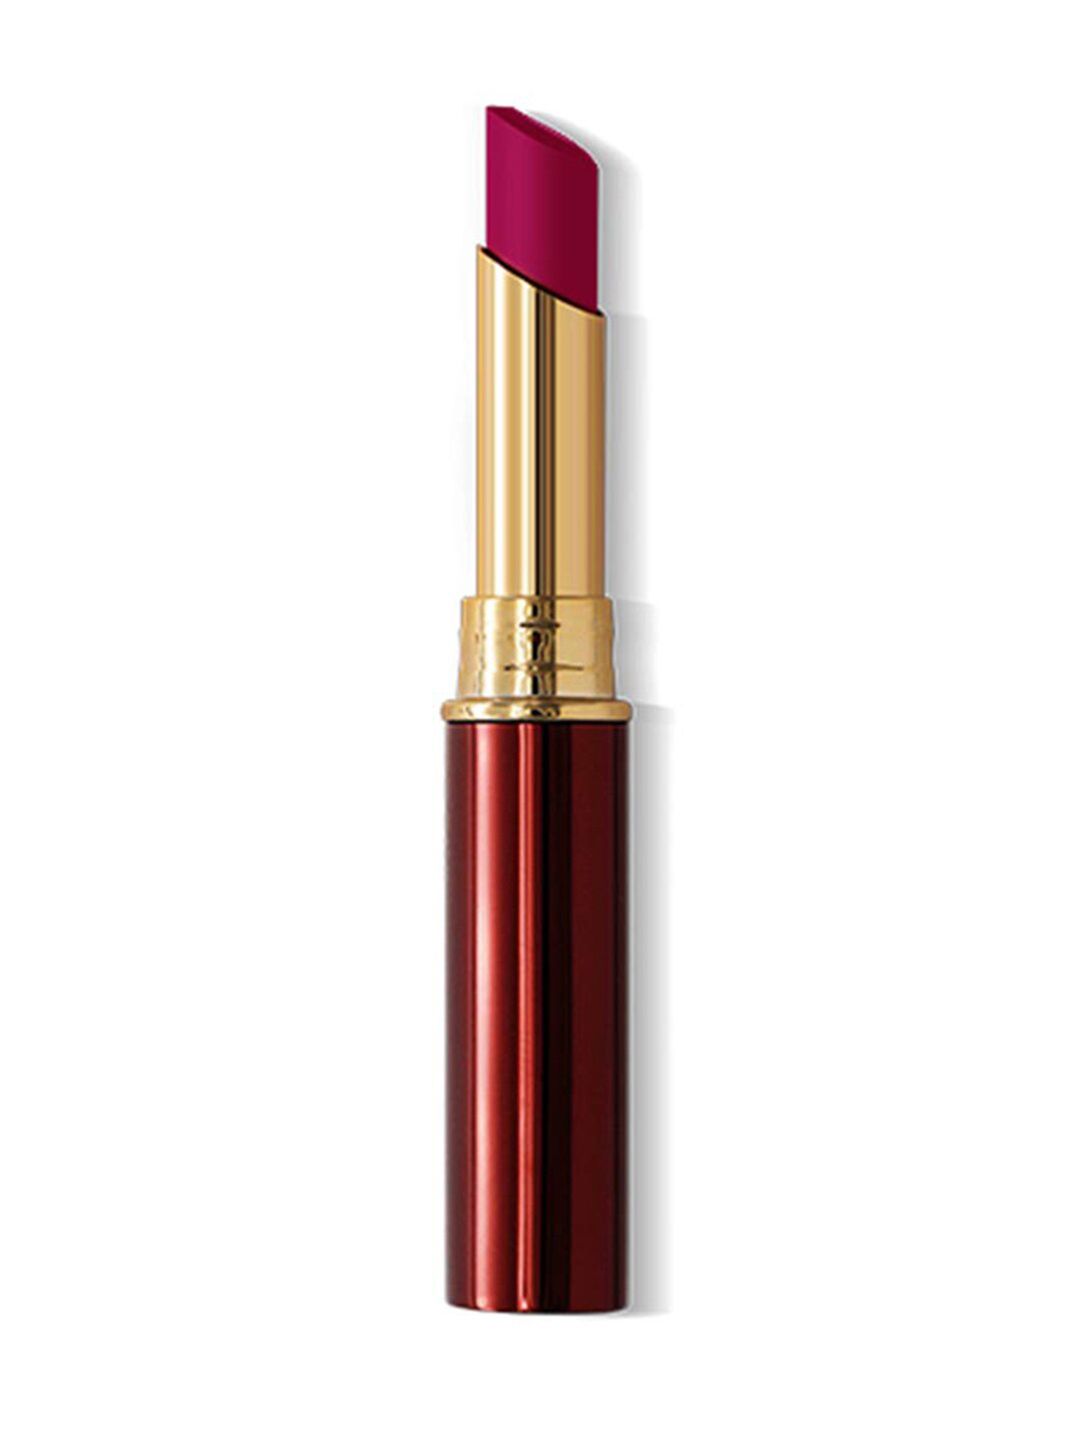 Charmacy Milano Lipstick - Missy & Fierce 68 Price in India